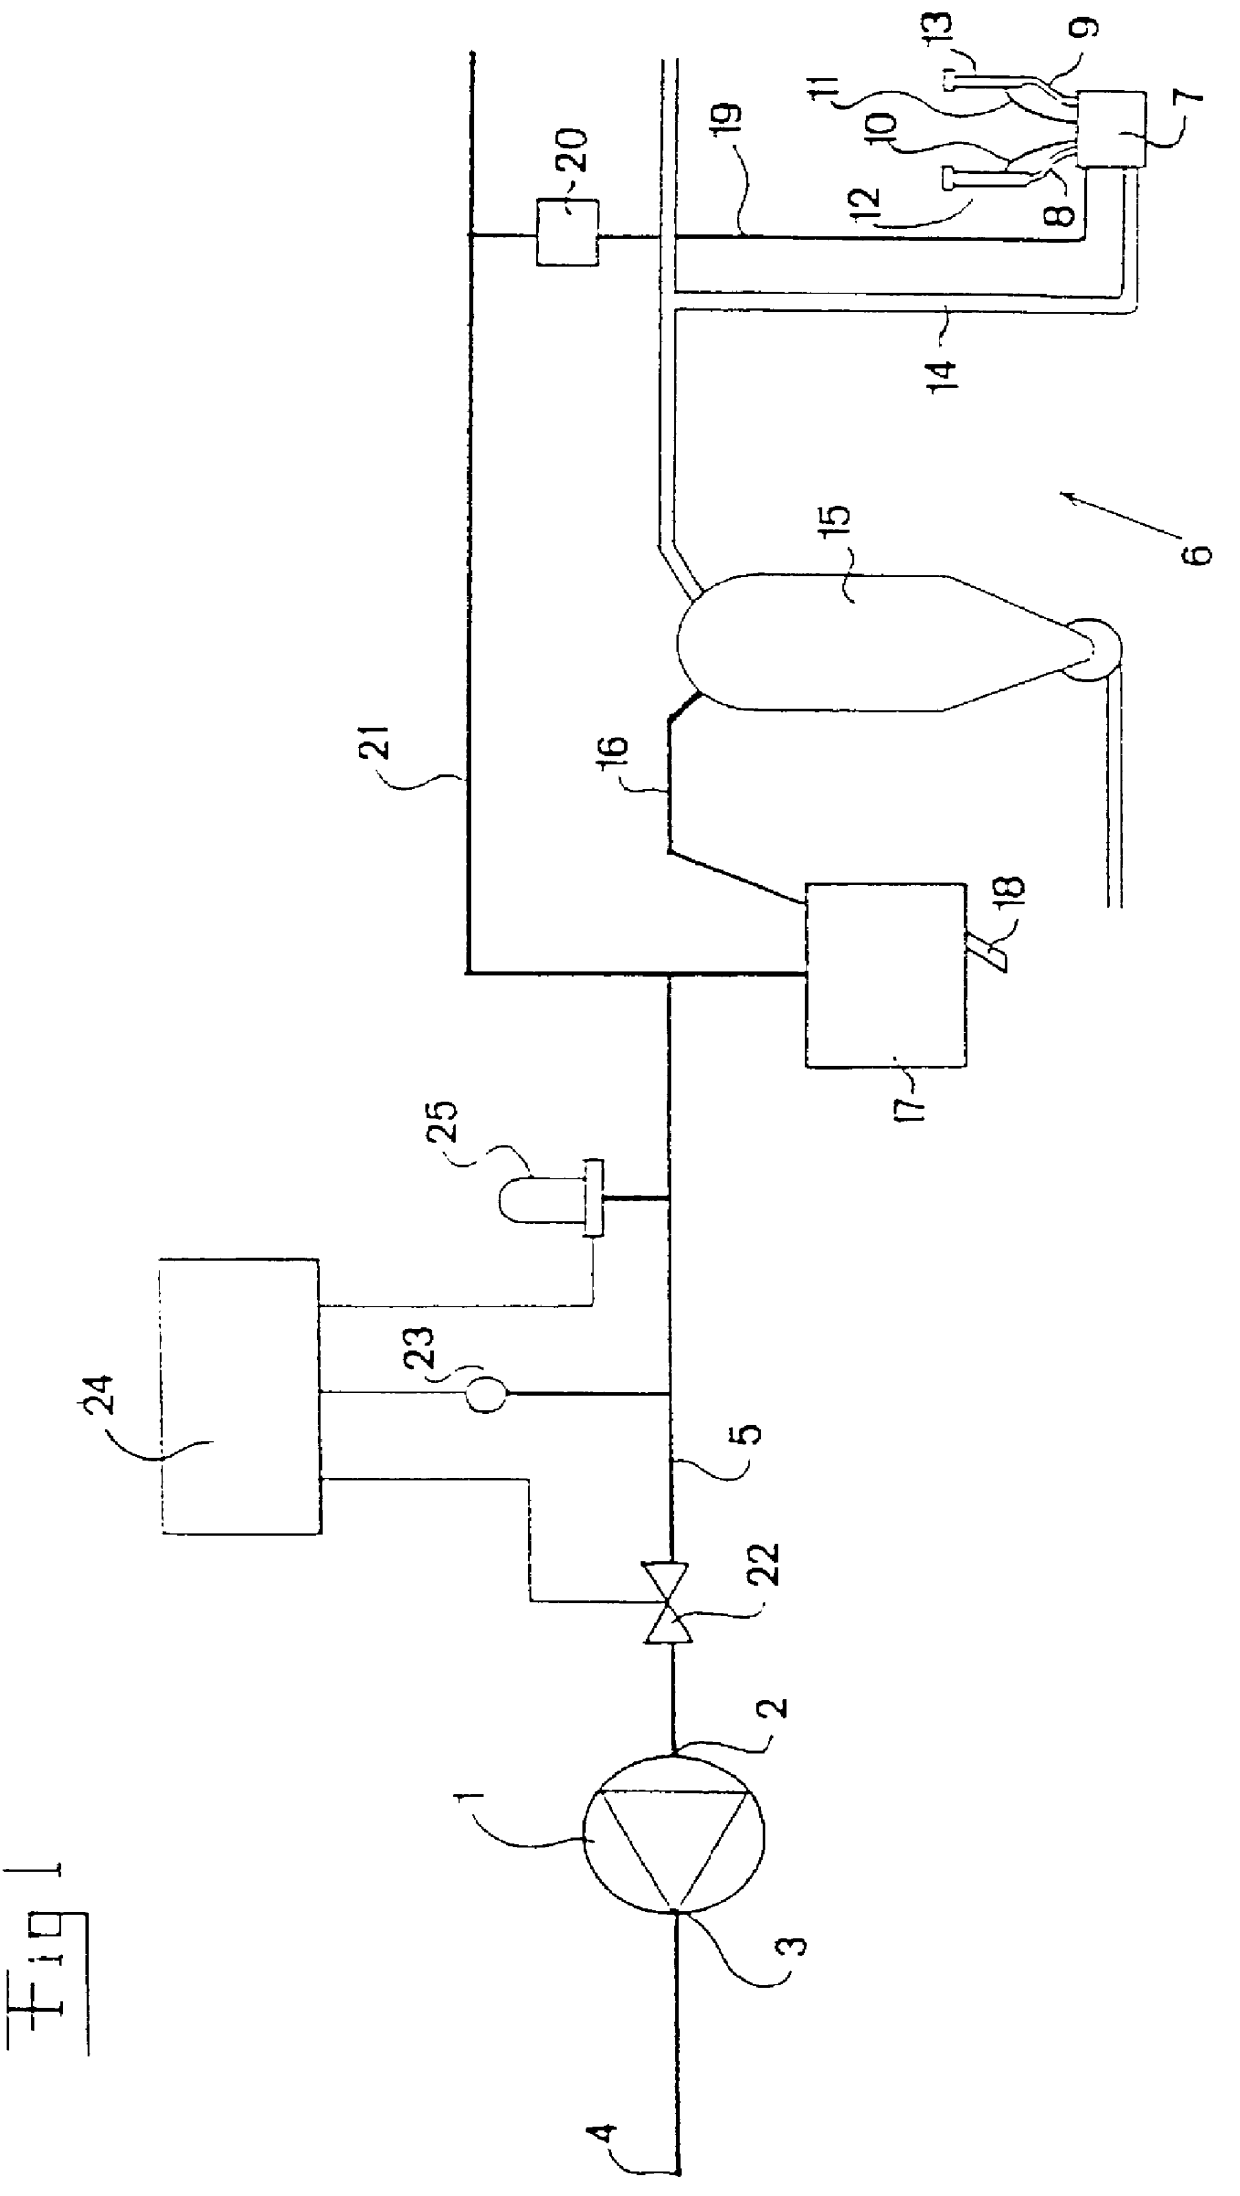 Method of regulating the vacuum level in a milking apparatus, and a milking apparatus